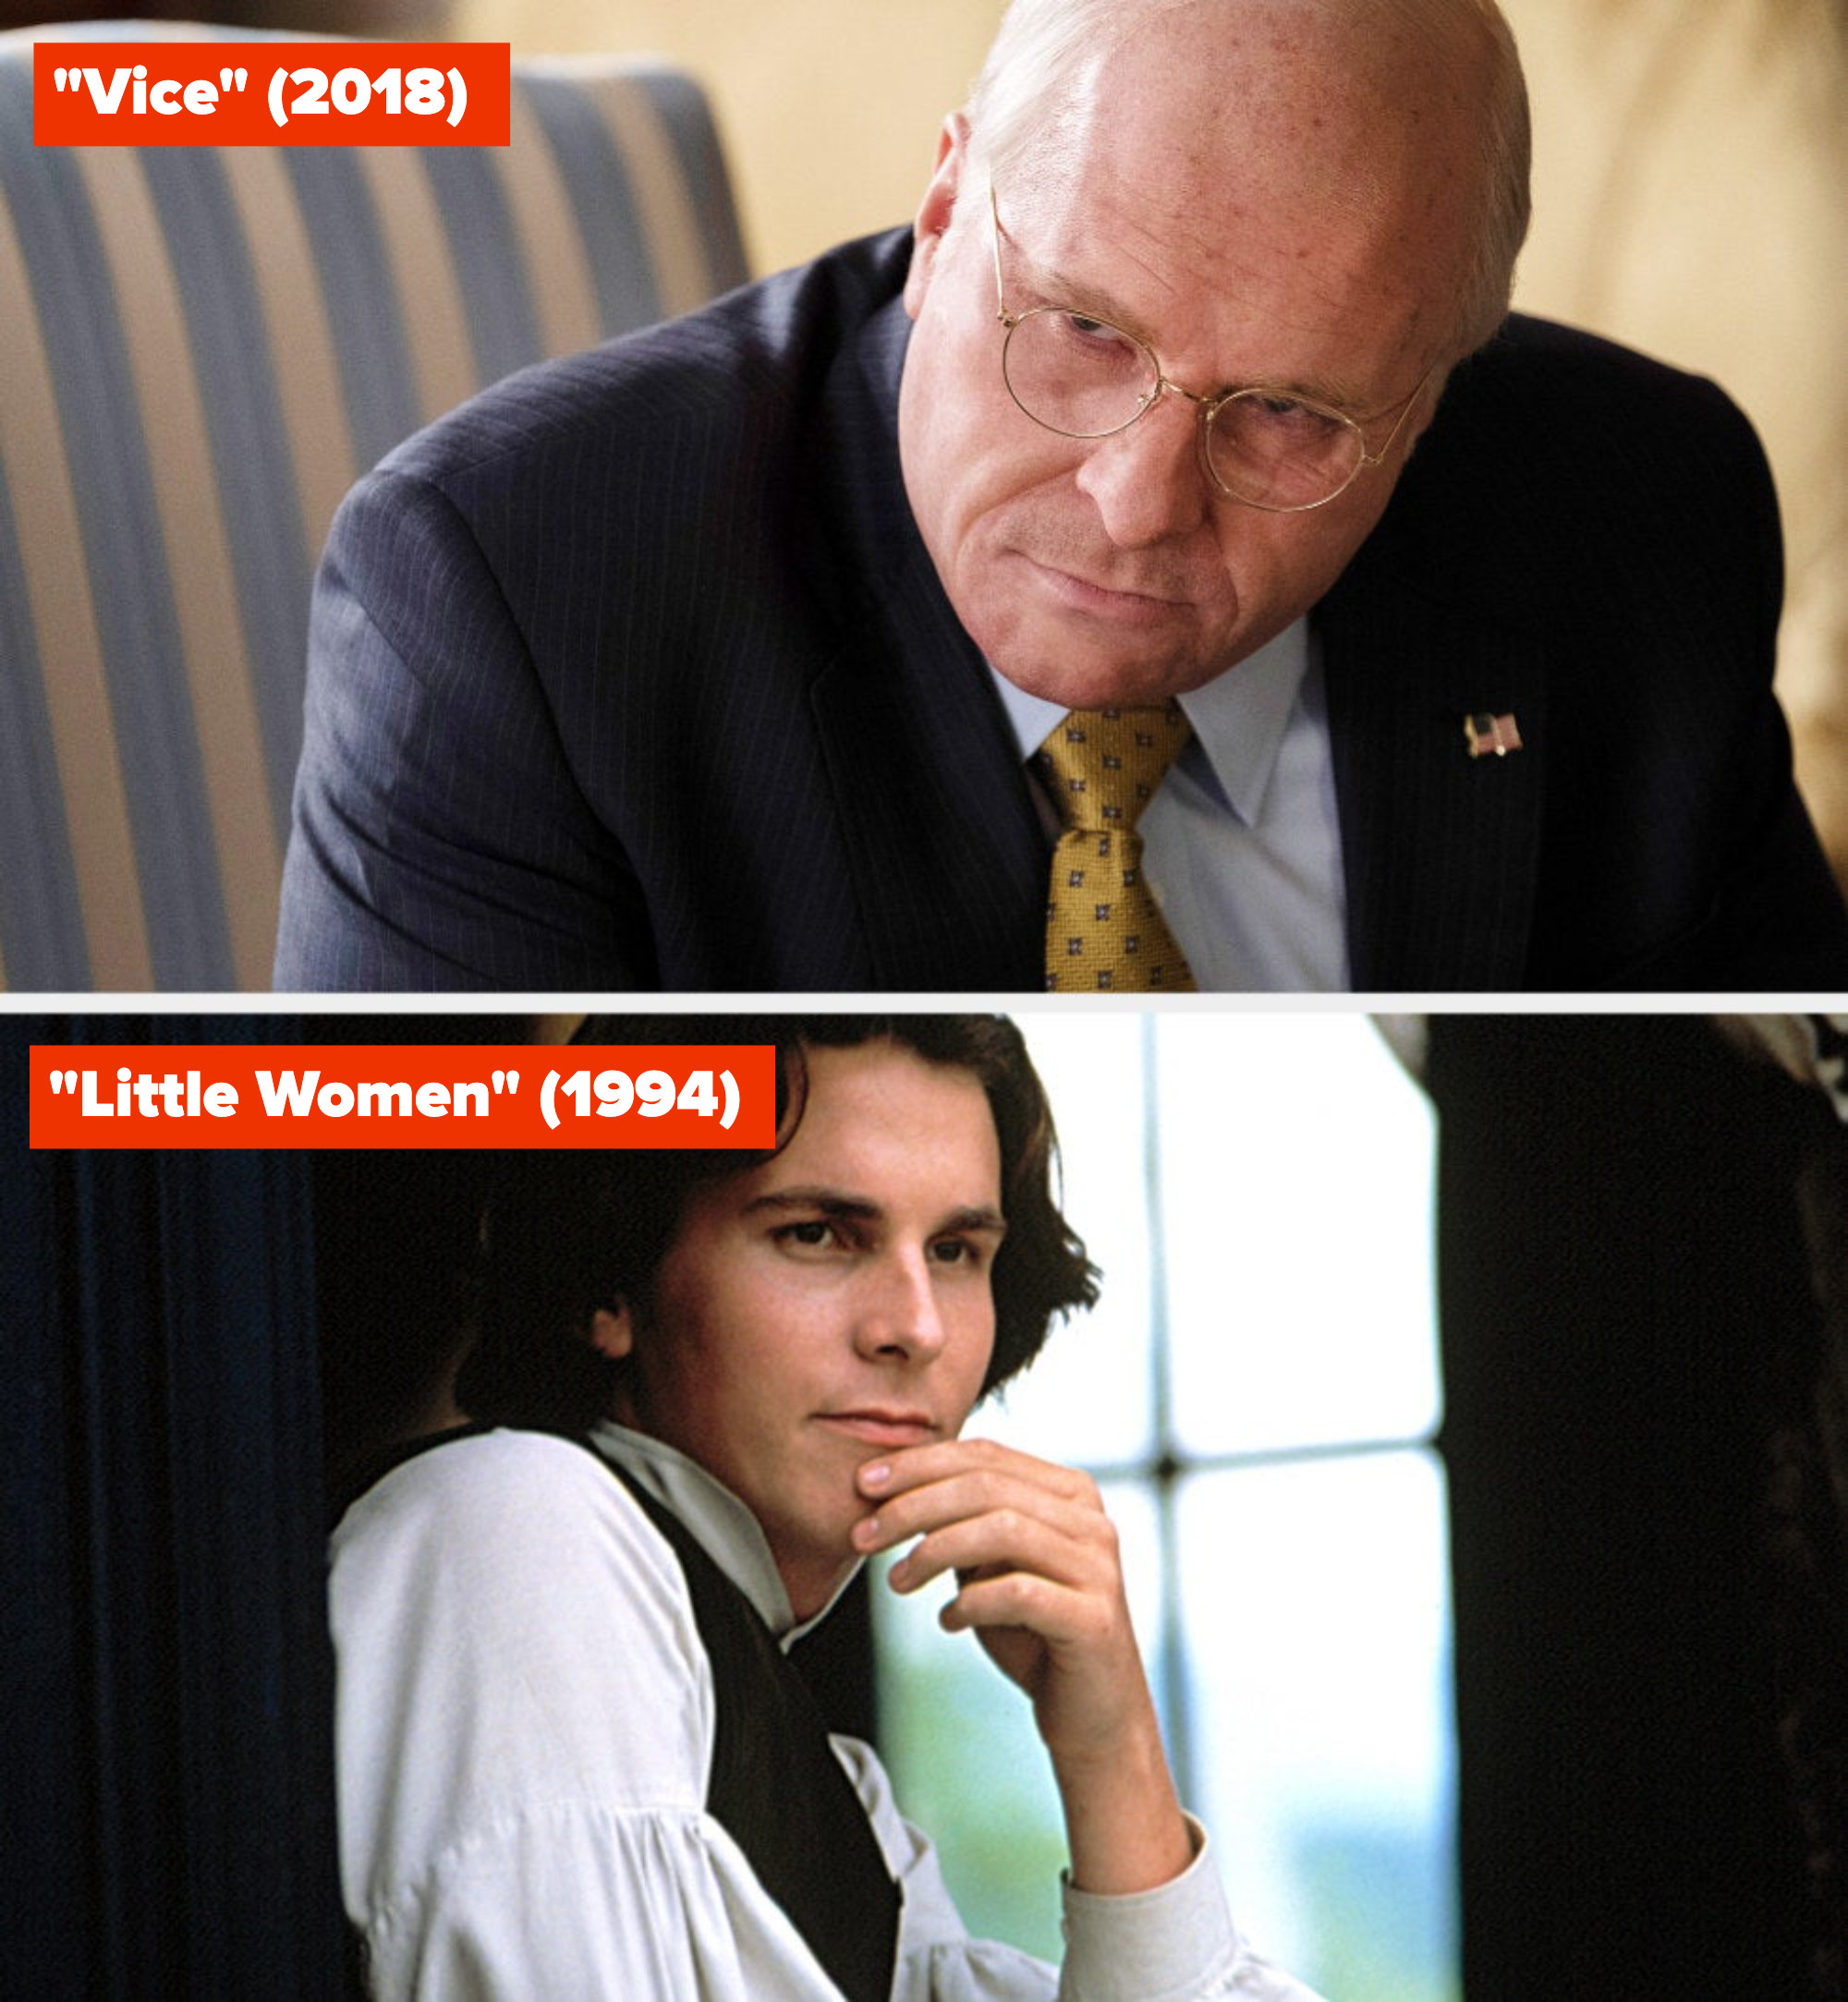 Christian Bale in &quot;Vice&quot; and &quot;Little Women&quot; (1994)